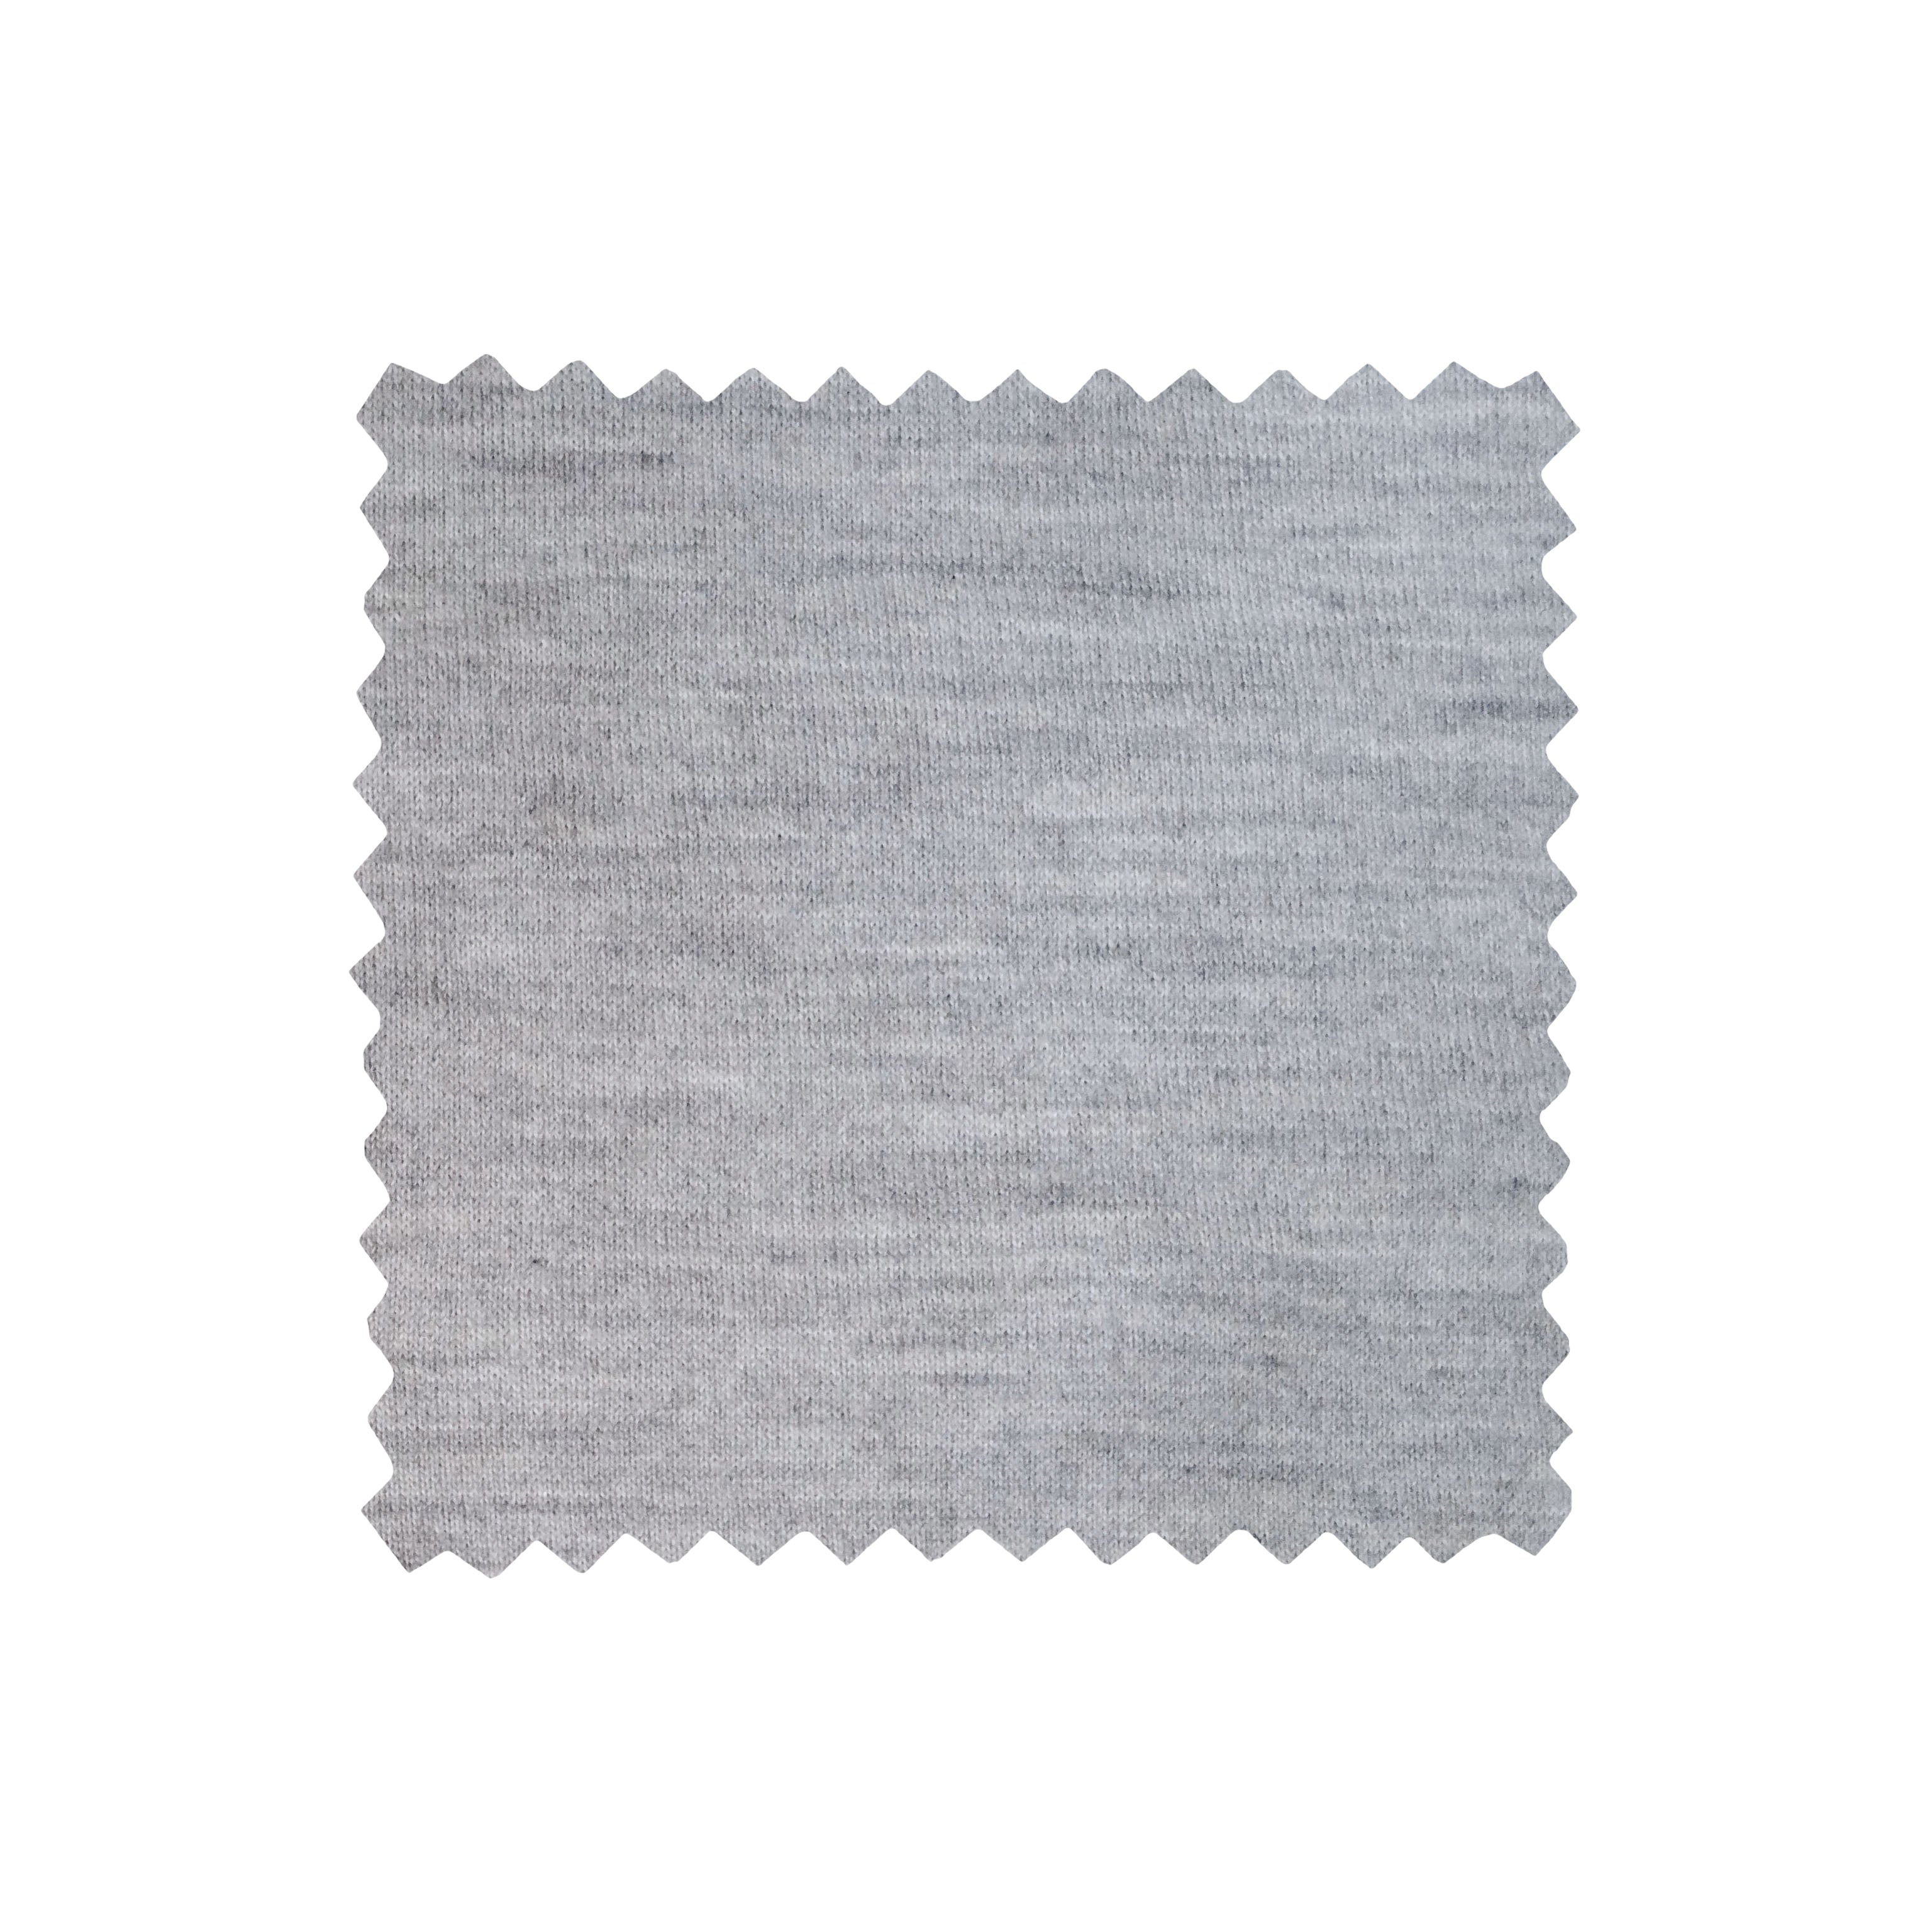 Jämtland Woollen Fleece Fabric Sample